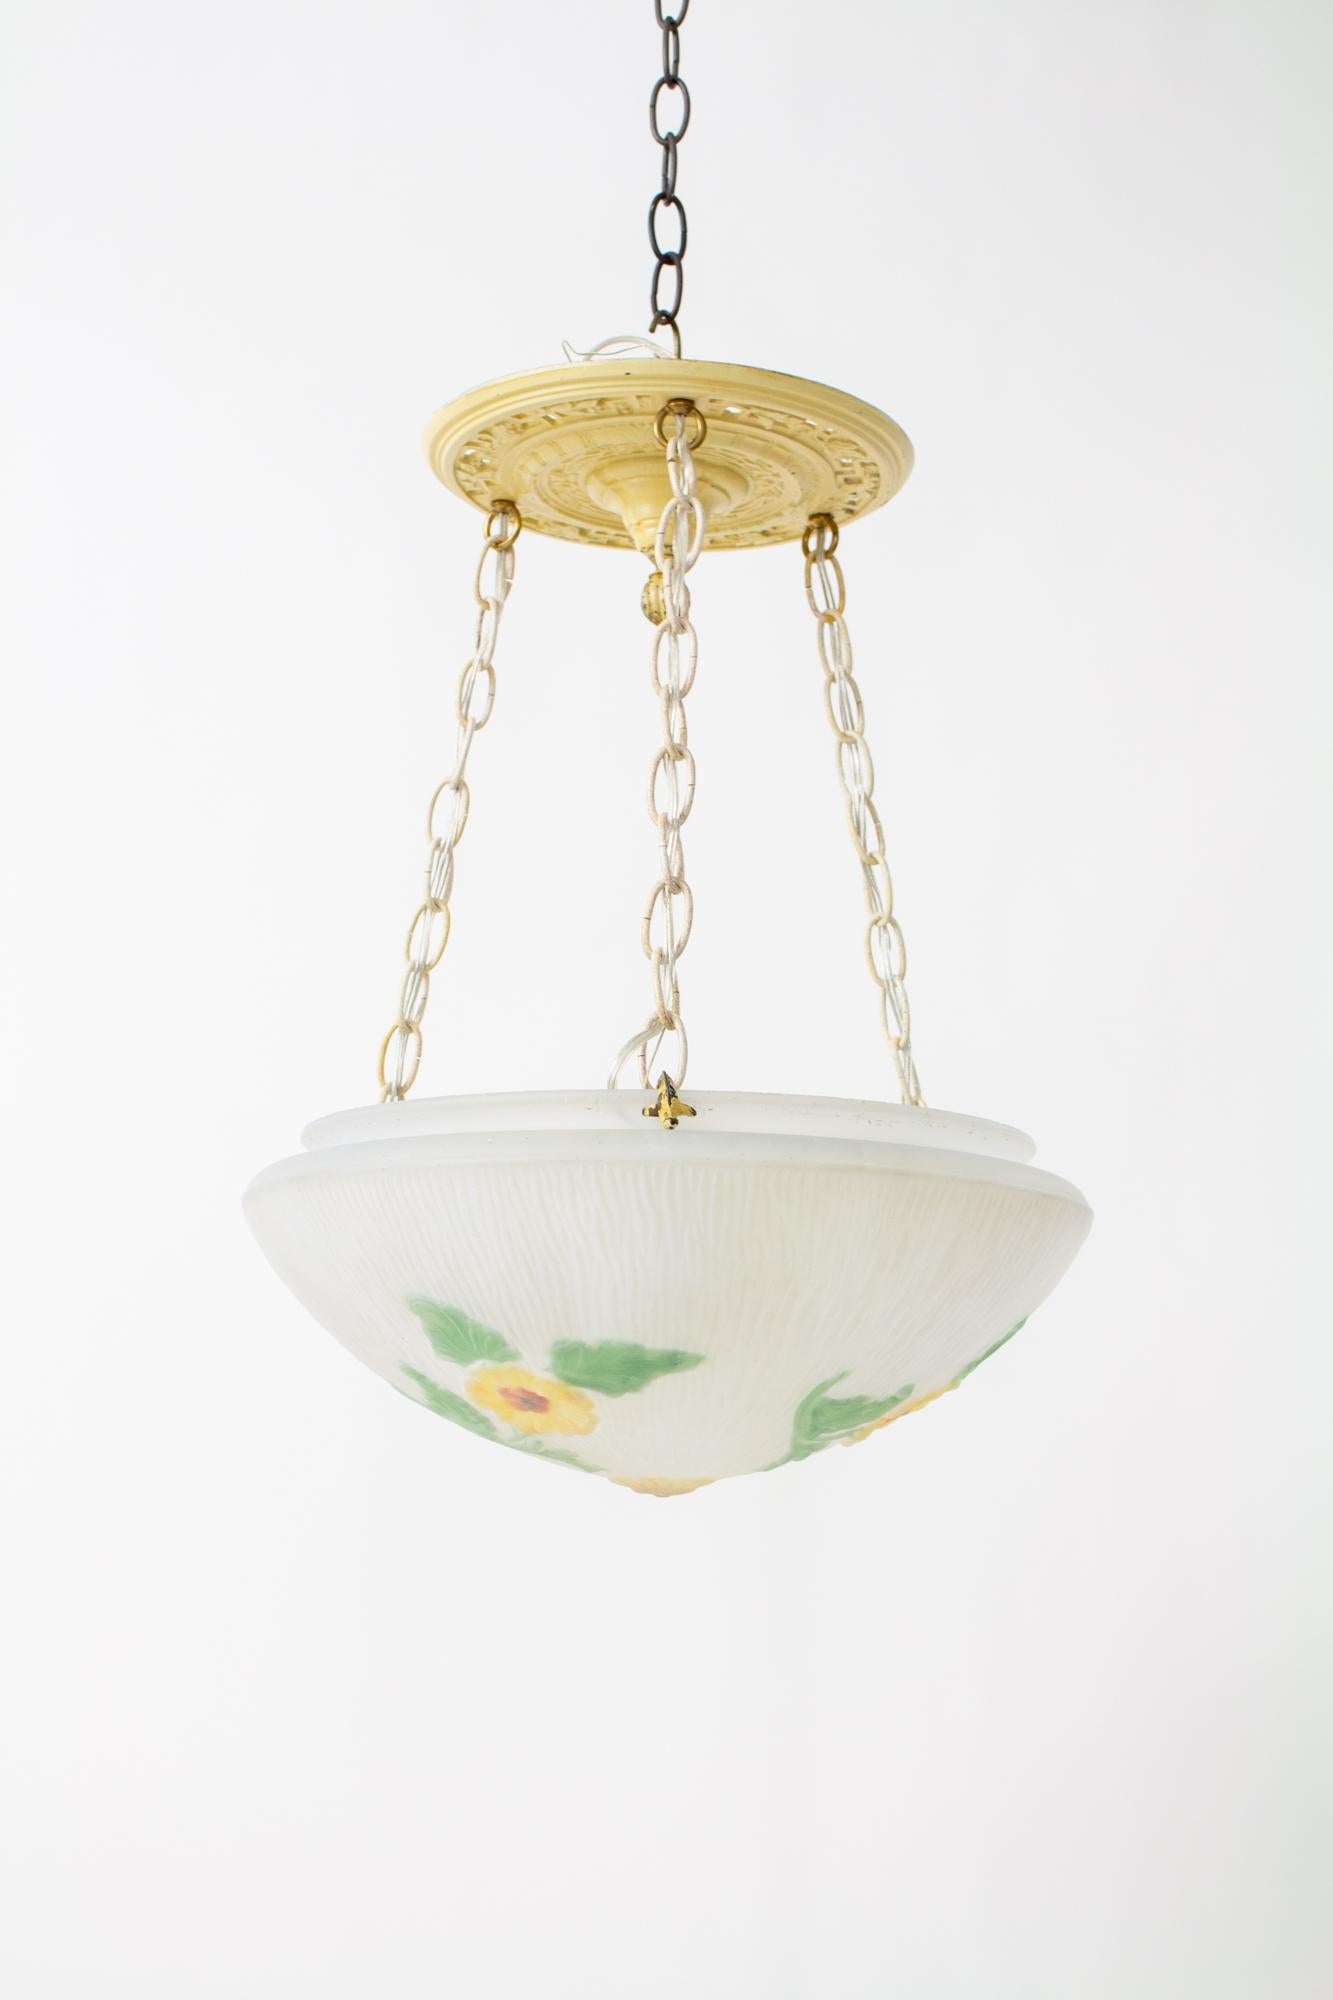 Art Nouveau Early 20th Century Glass Flower Bowl Fixture For Sale